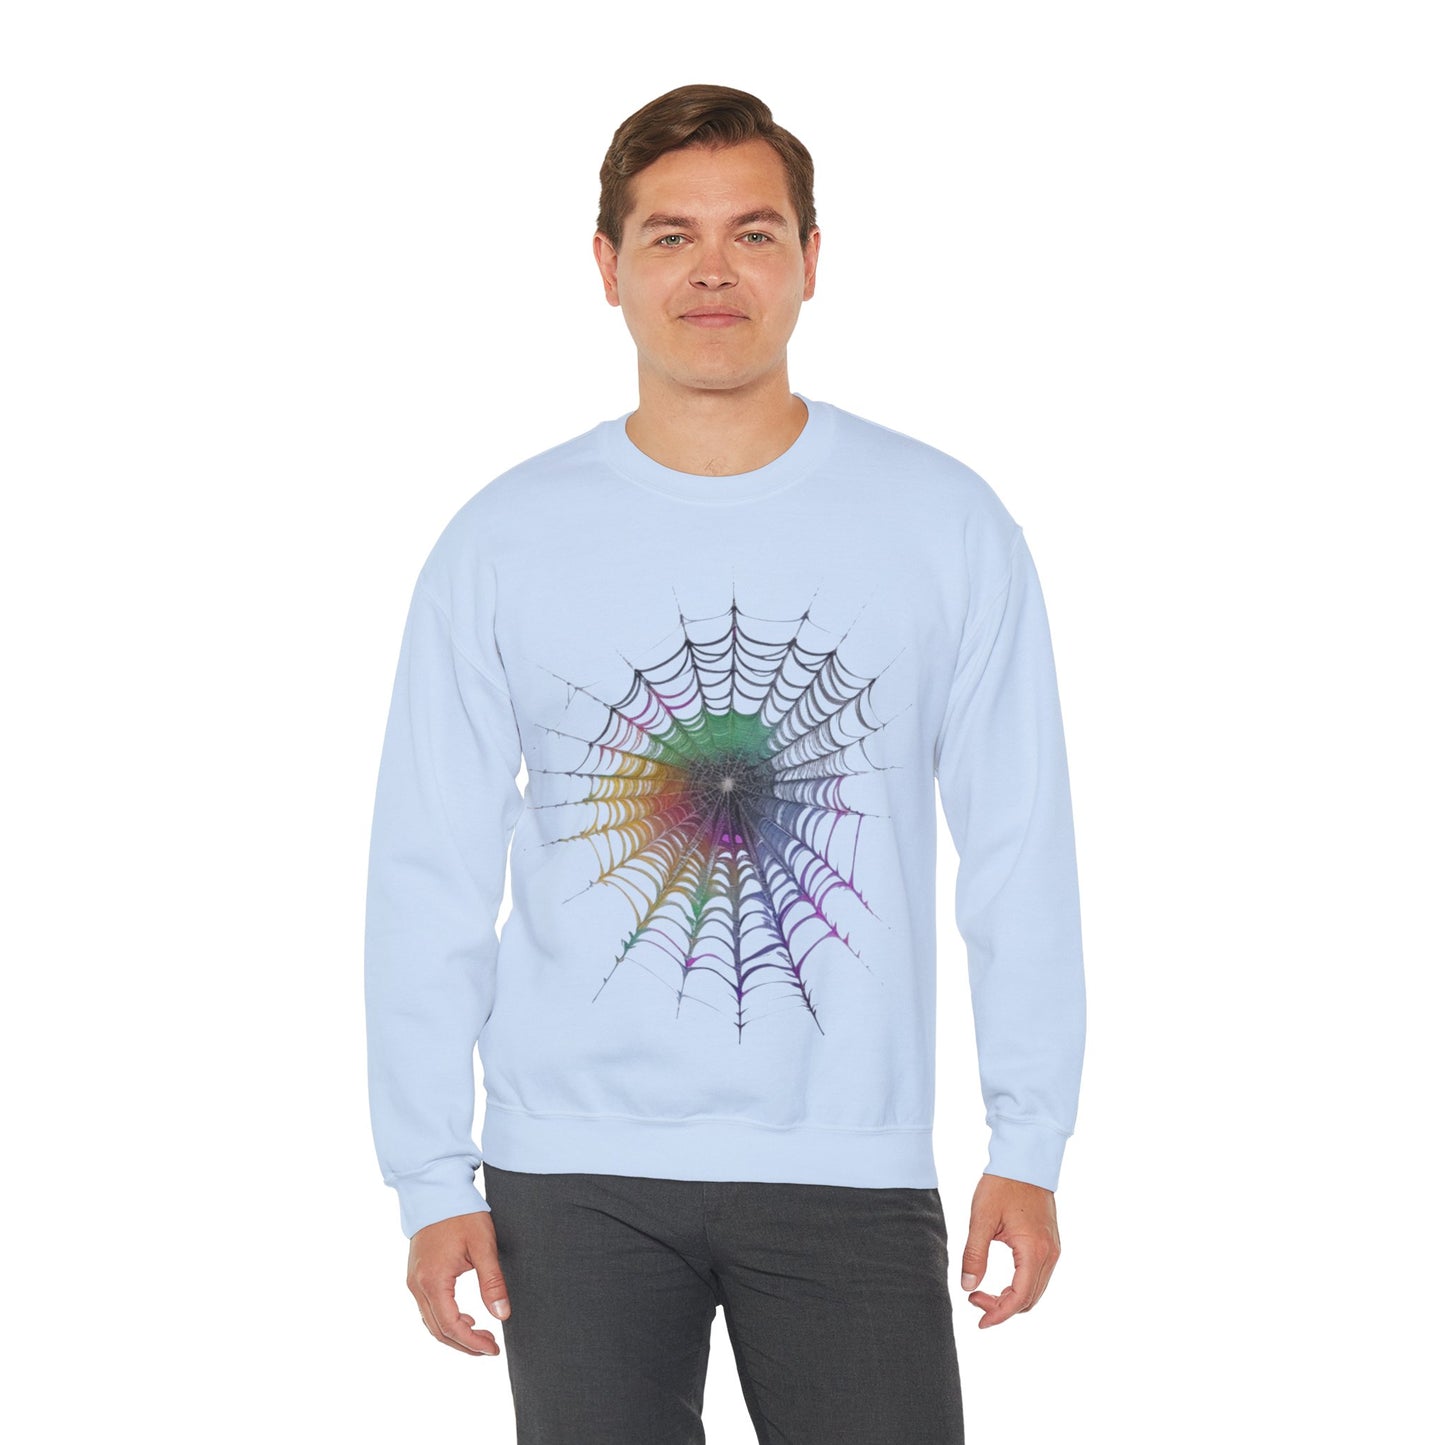 Colourful Spiderweb - Unisex Crewneck Sweatshirt